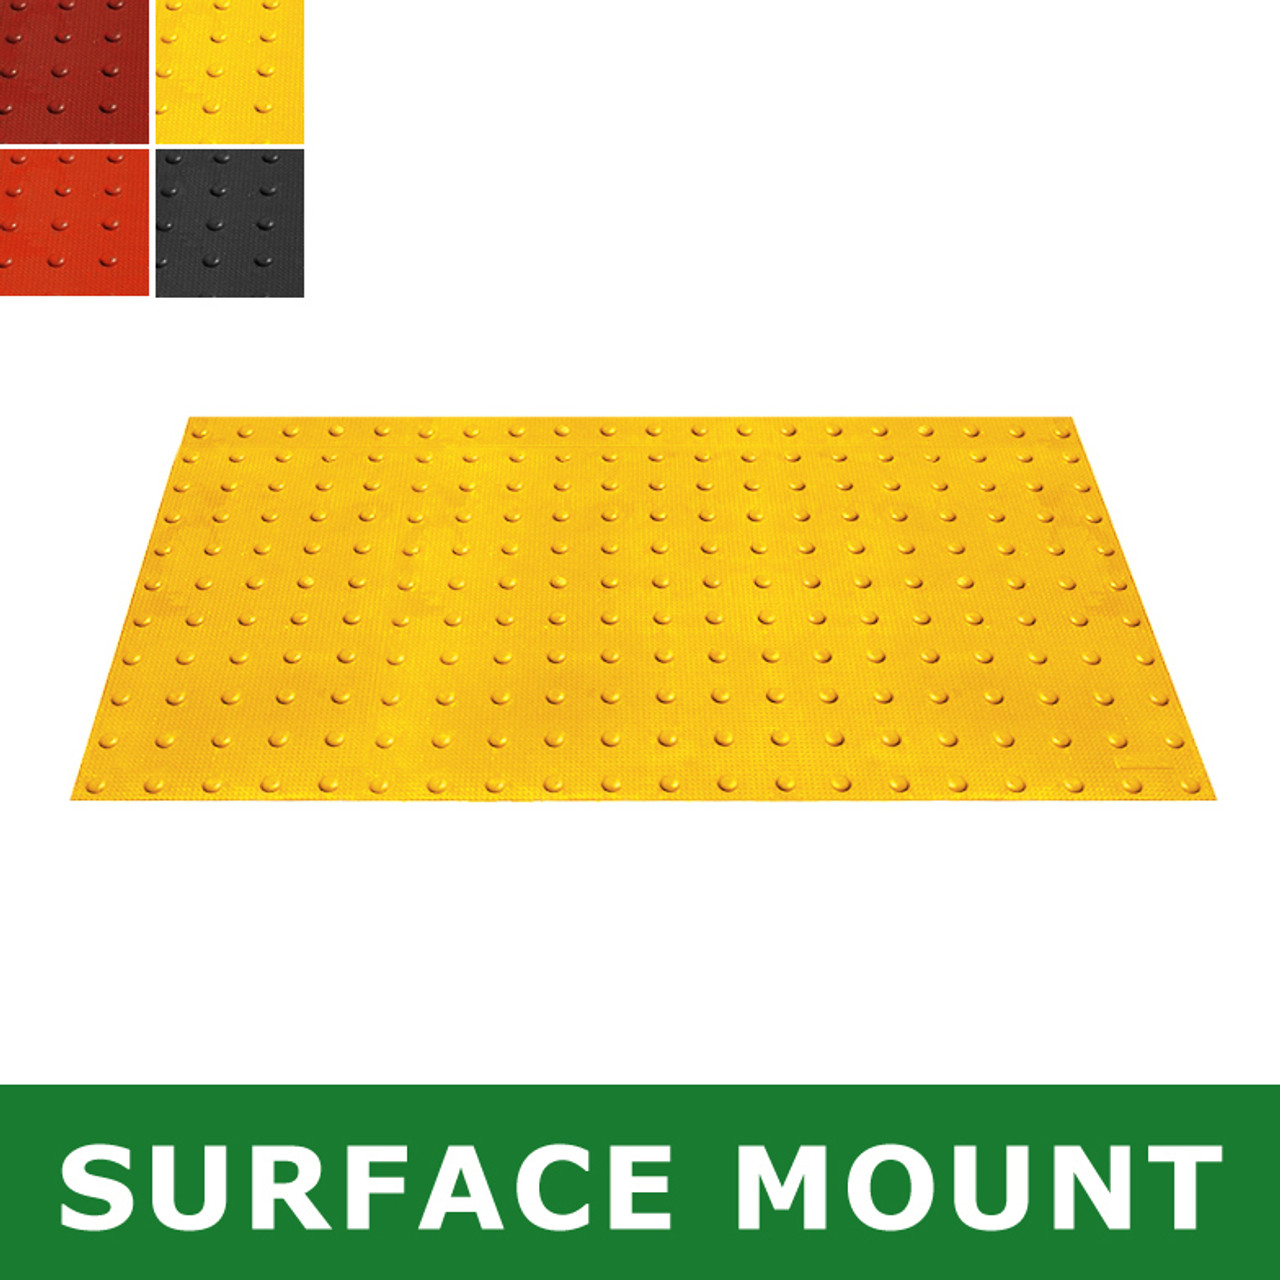 Foam Bumper Guard Bulk Roll - Type F, Adhesive Surface Guard